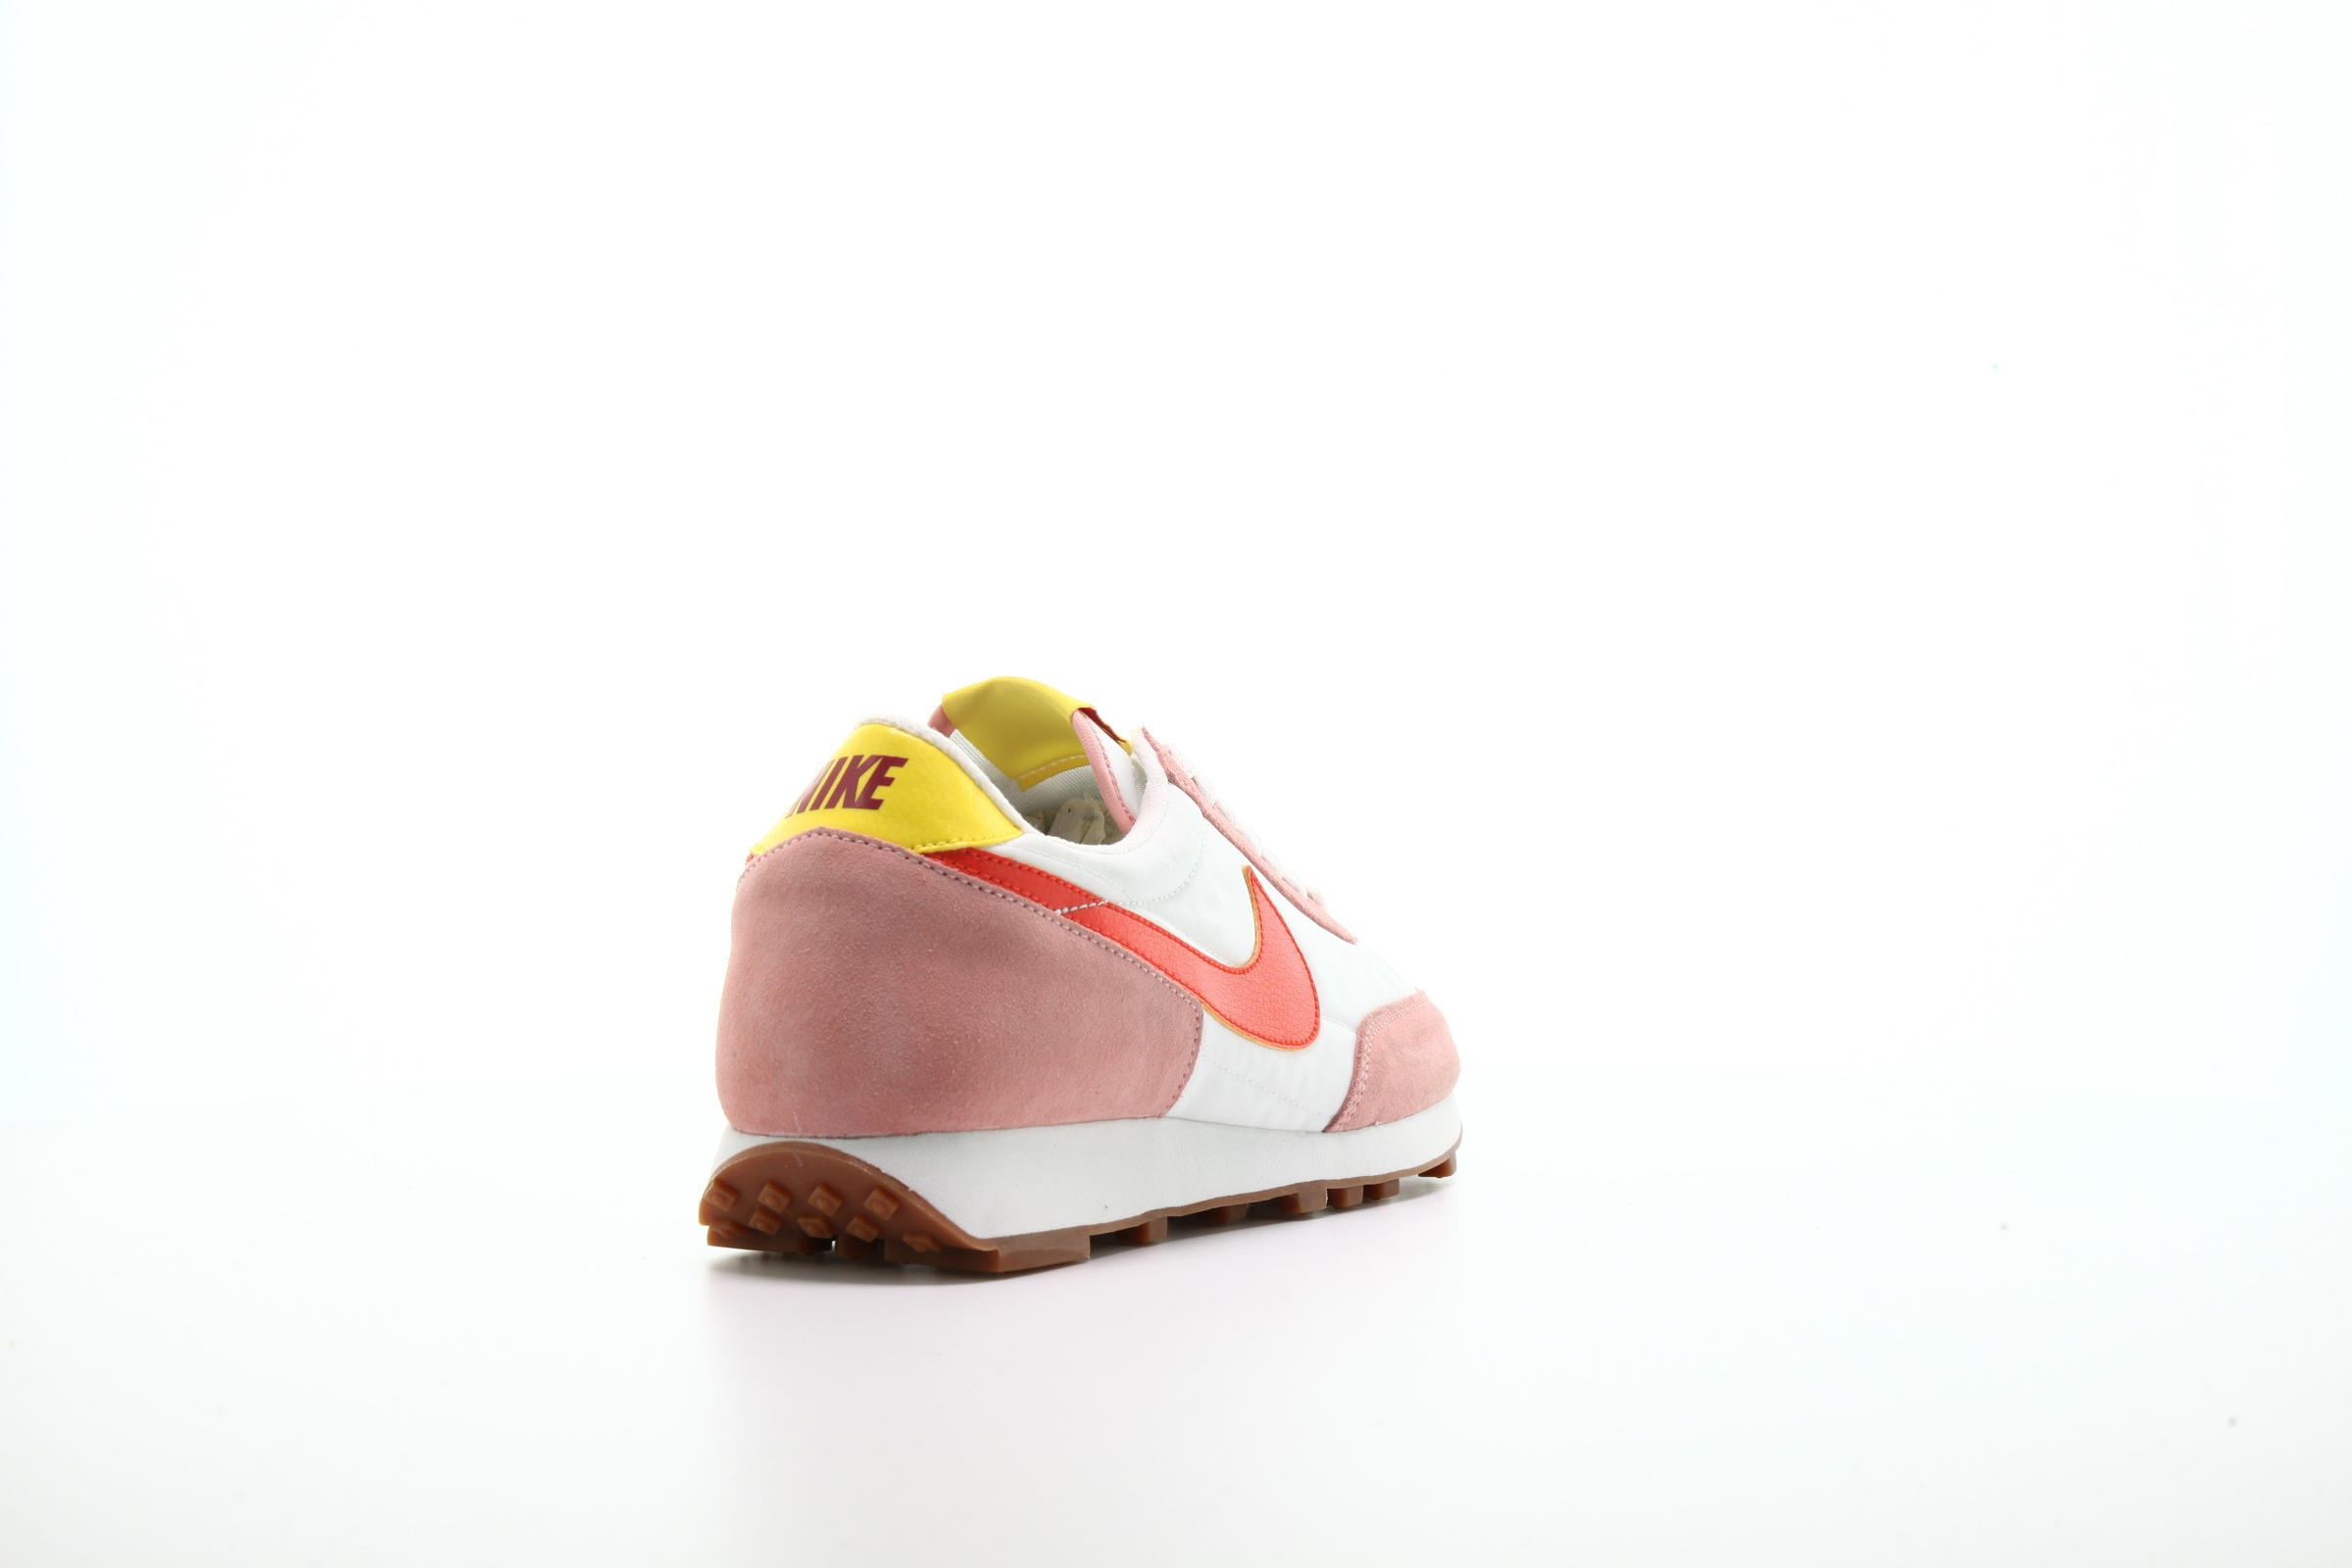 Nike WMNS Daybreak "Coral Srardust"